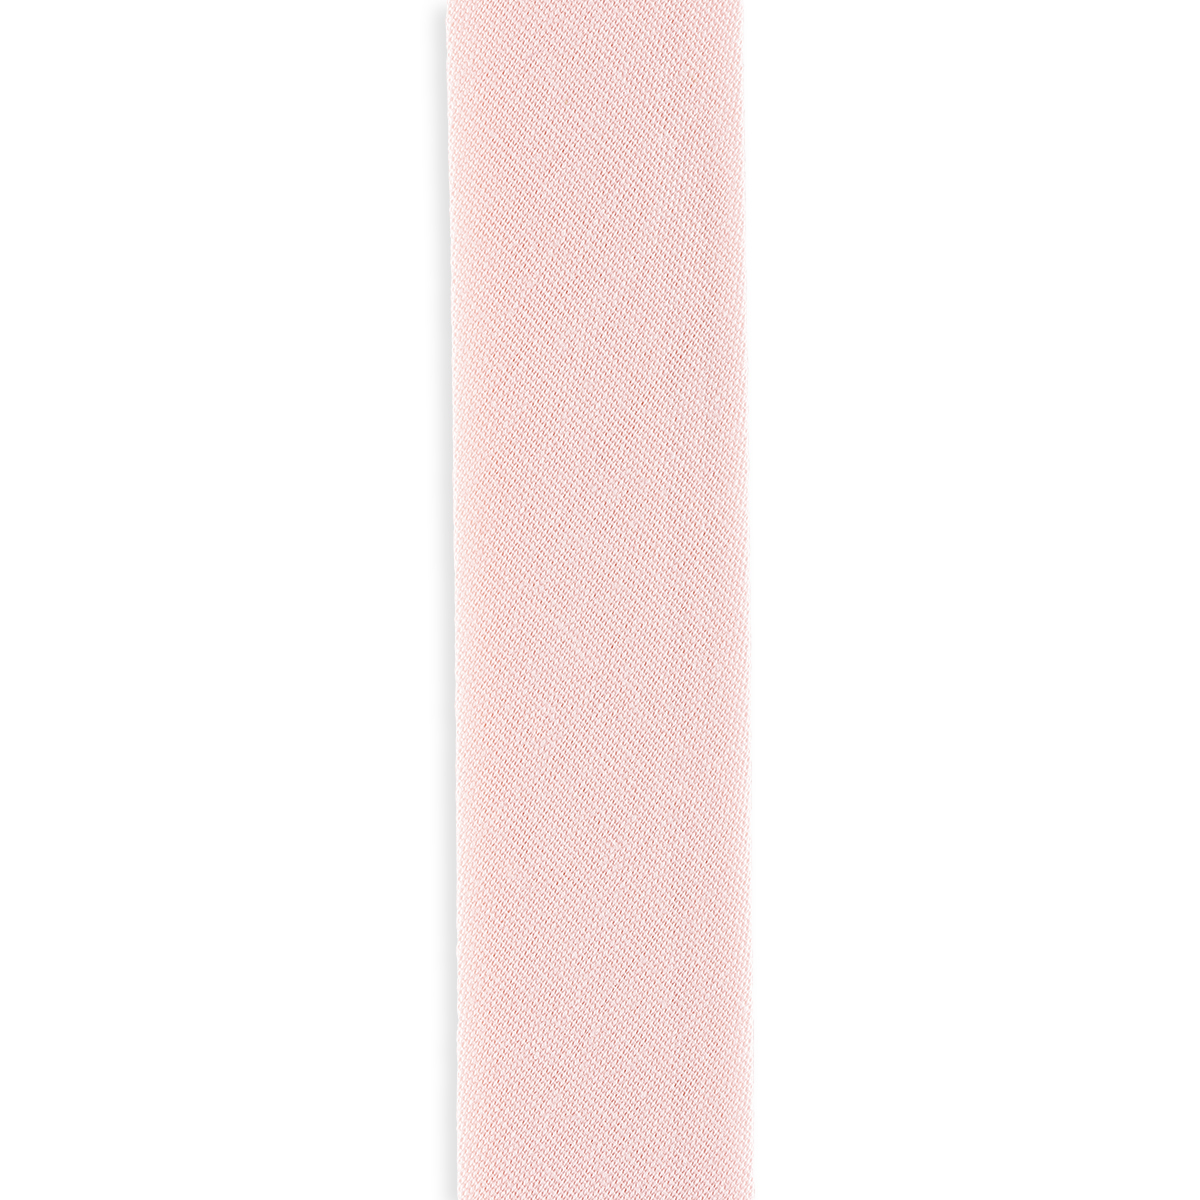 Light Pink Double Fold Bias Tape Quilt Binding WRI117706303 3 Yards